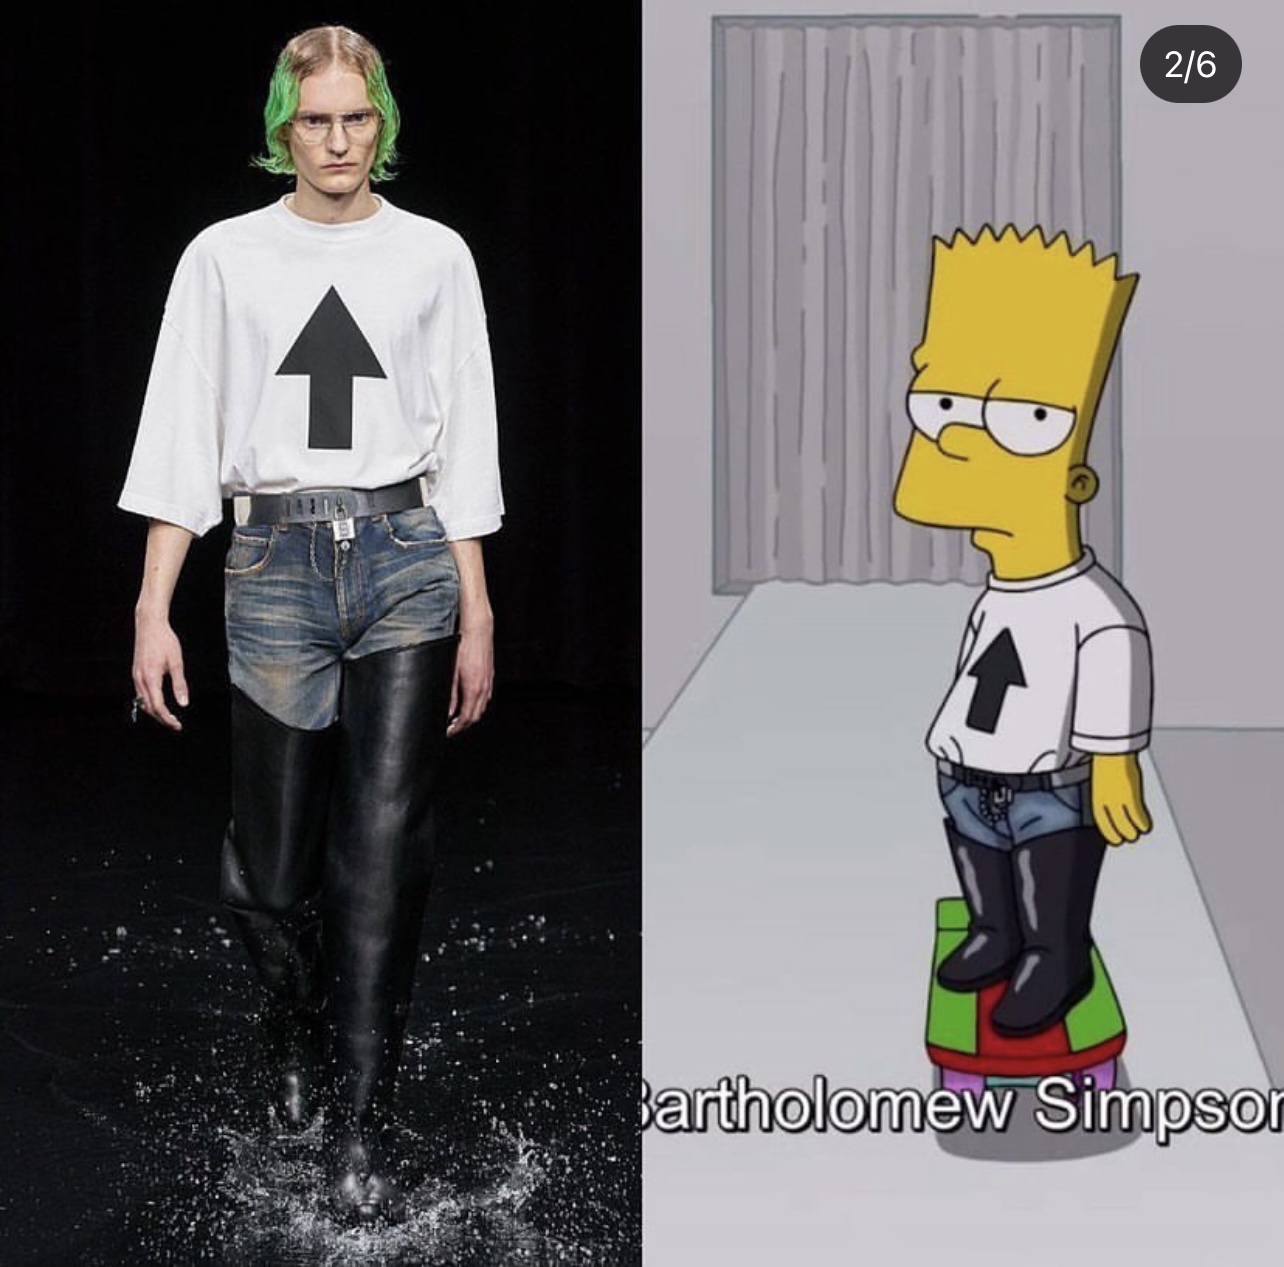 Oι Simpsons στο Fashion week στο Παρίσι!